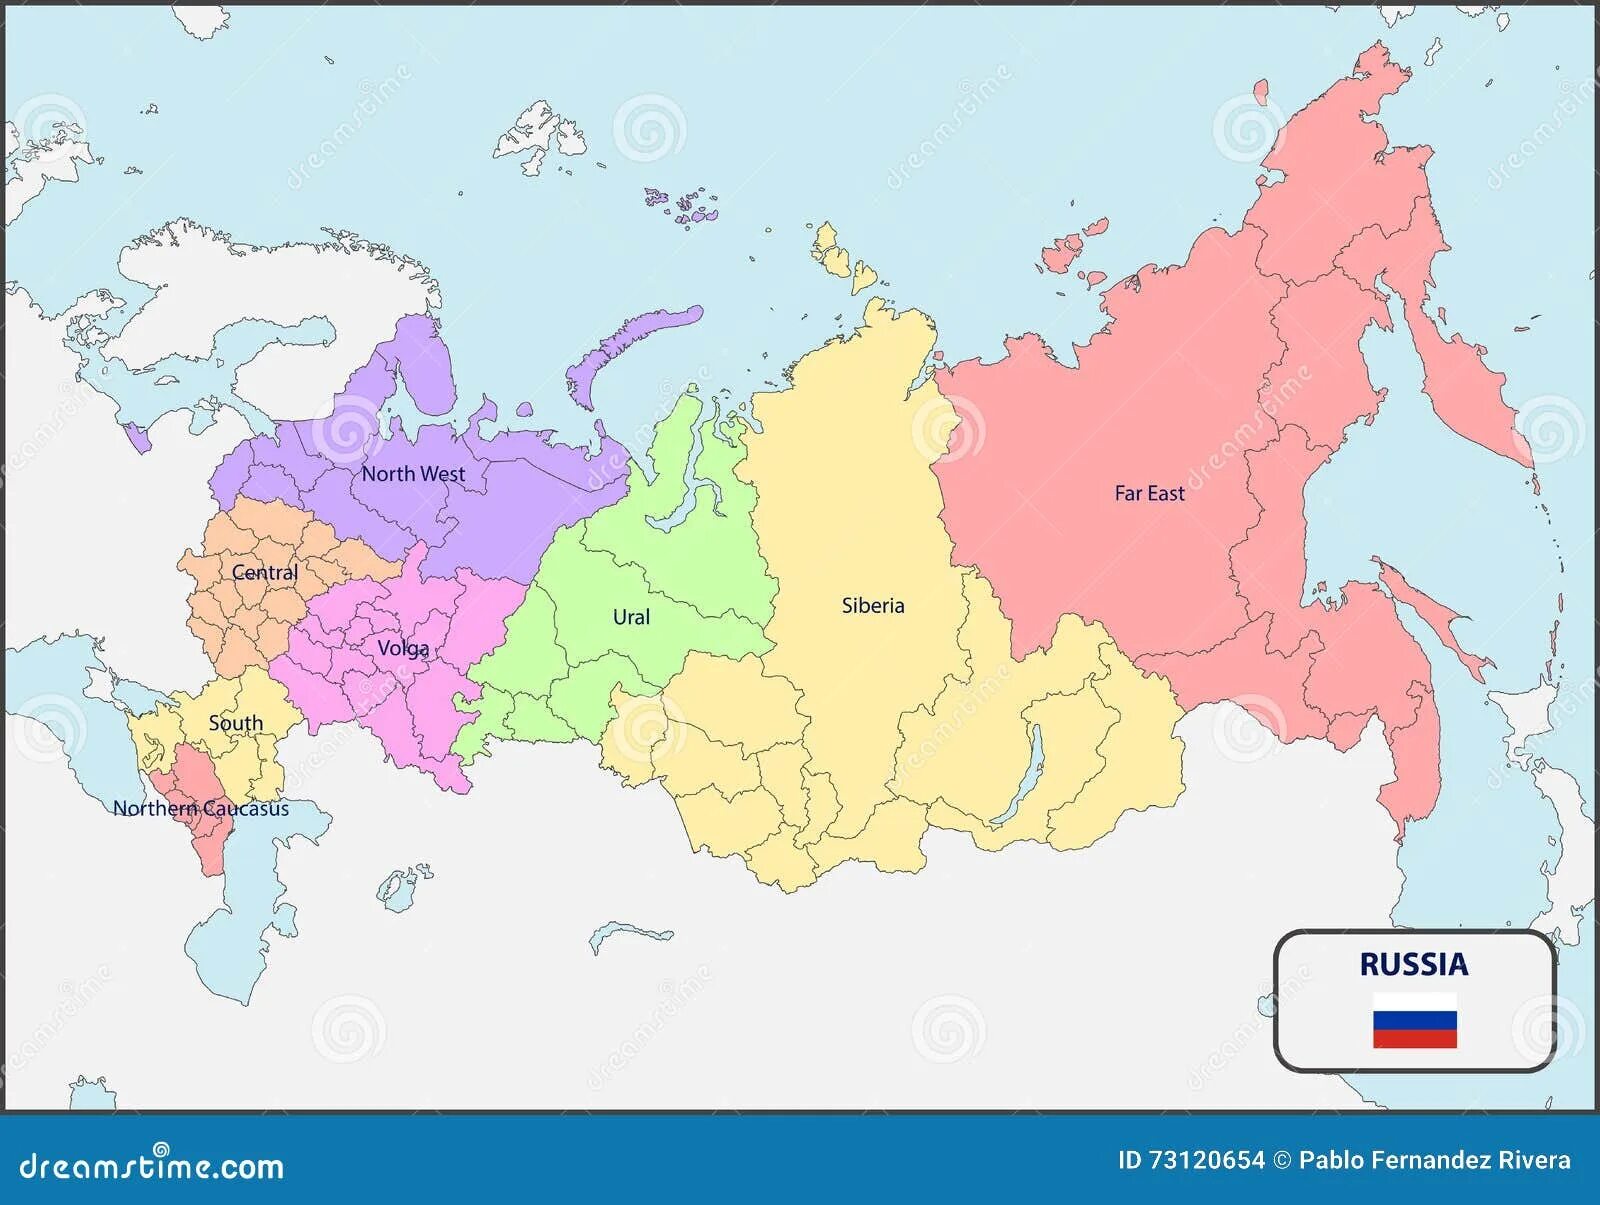 Russian Federation Map. Russia West карта. Политическая карта России 2023. Map Western Russia. Russia is western